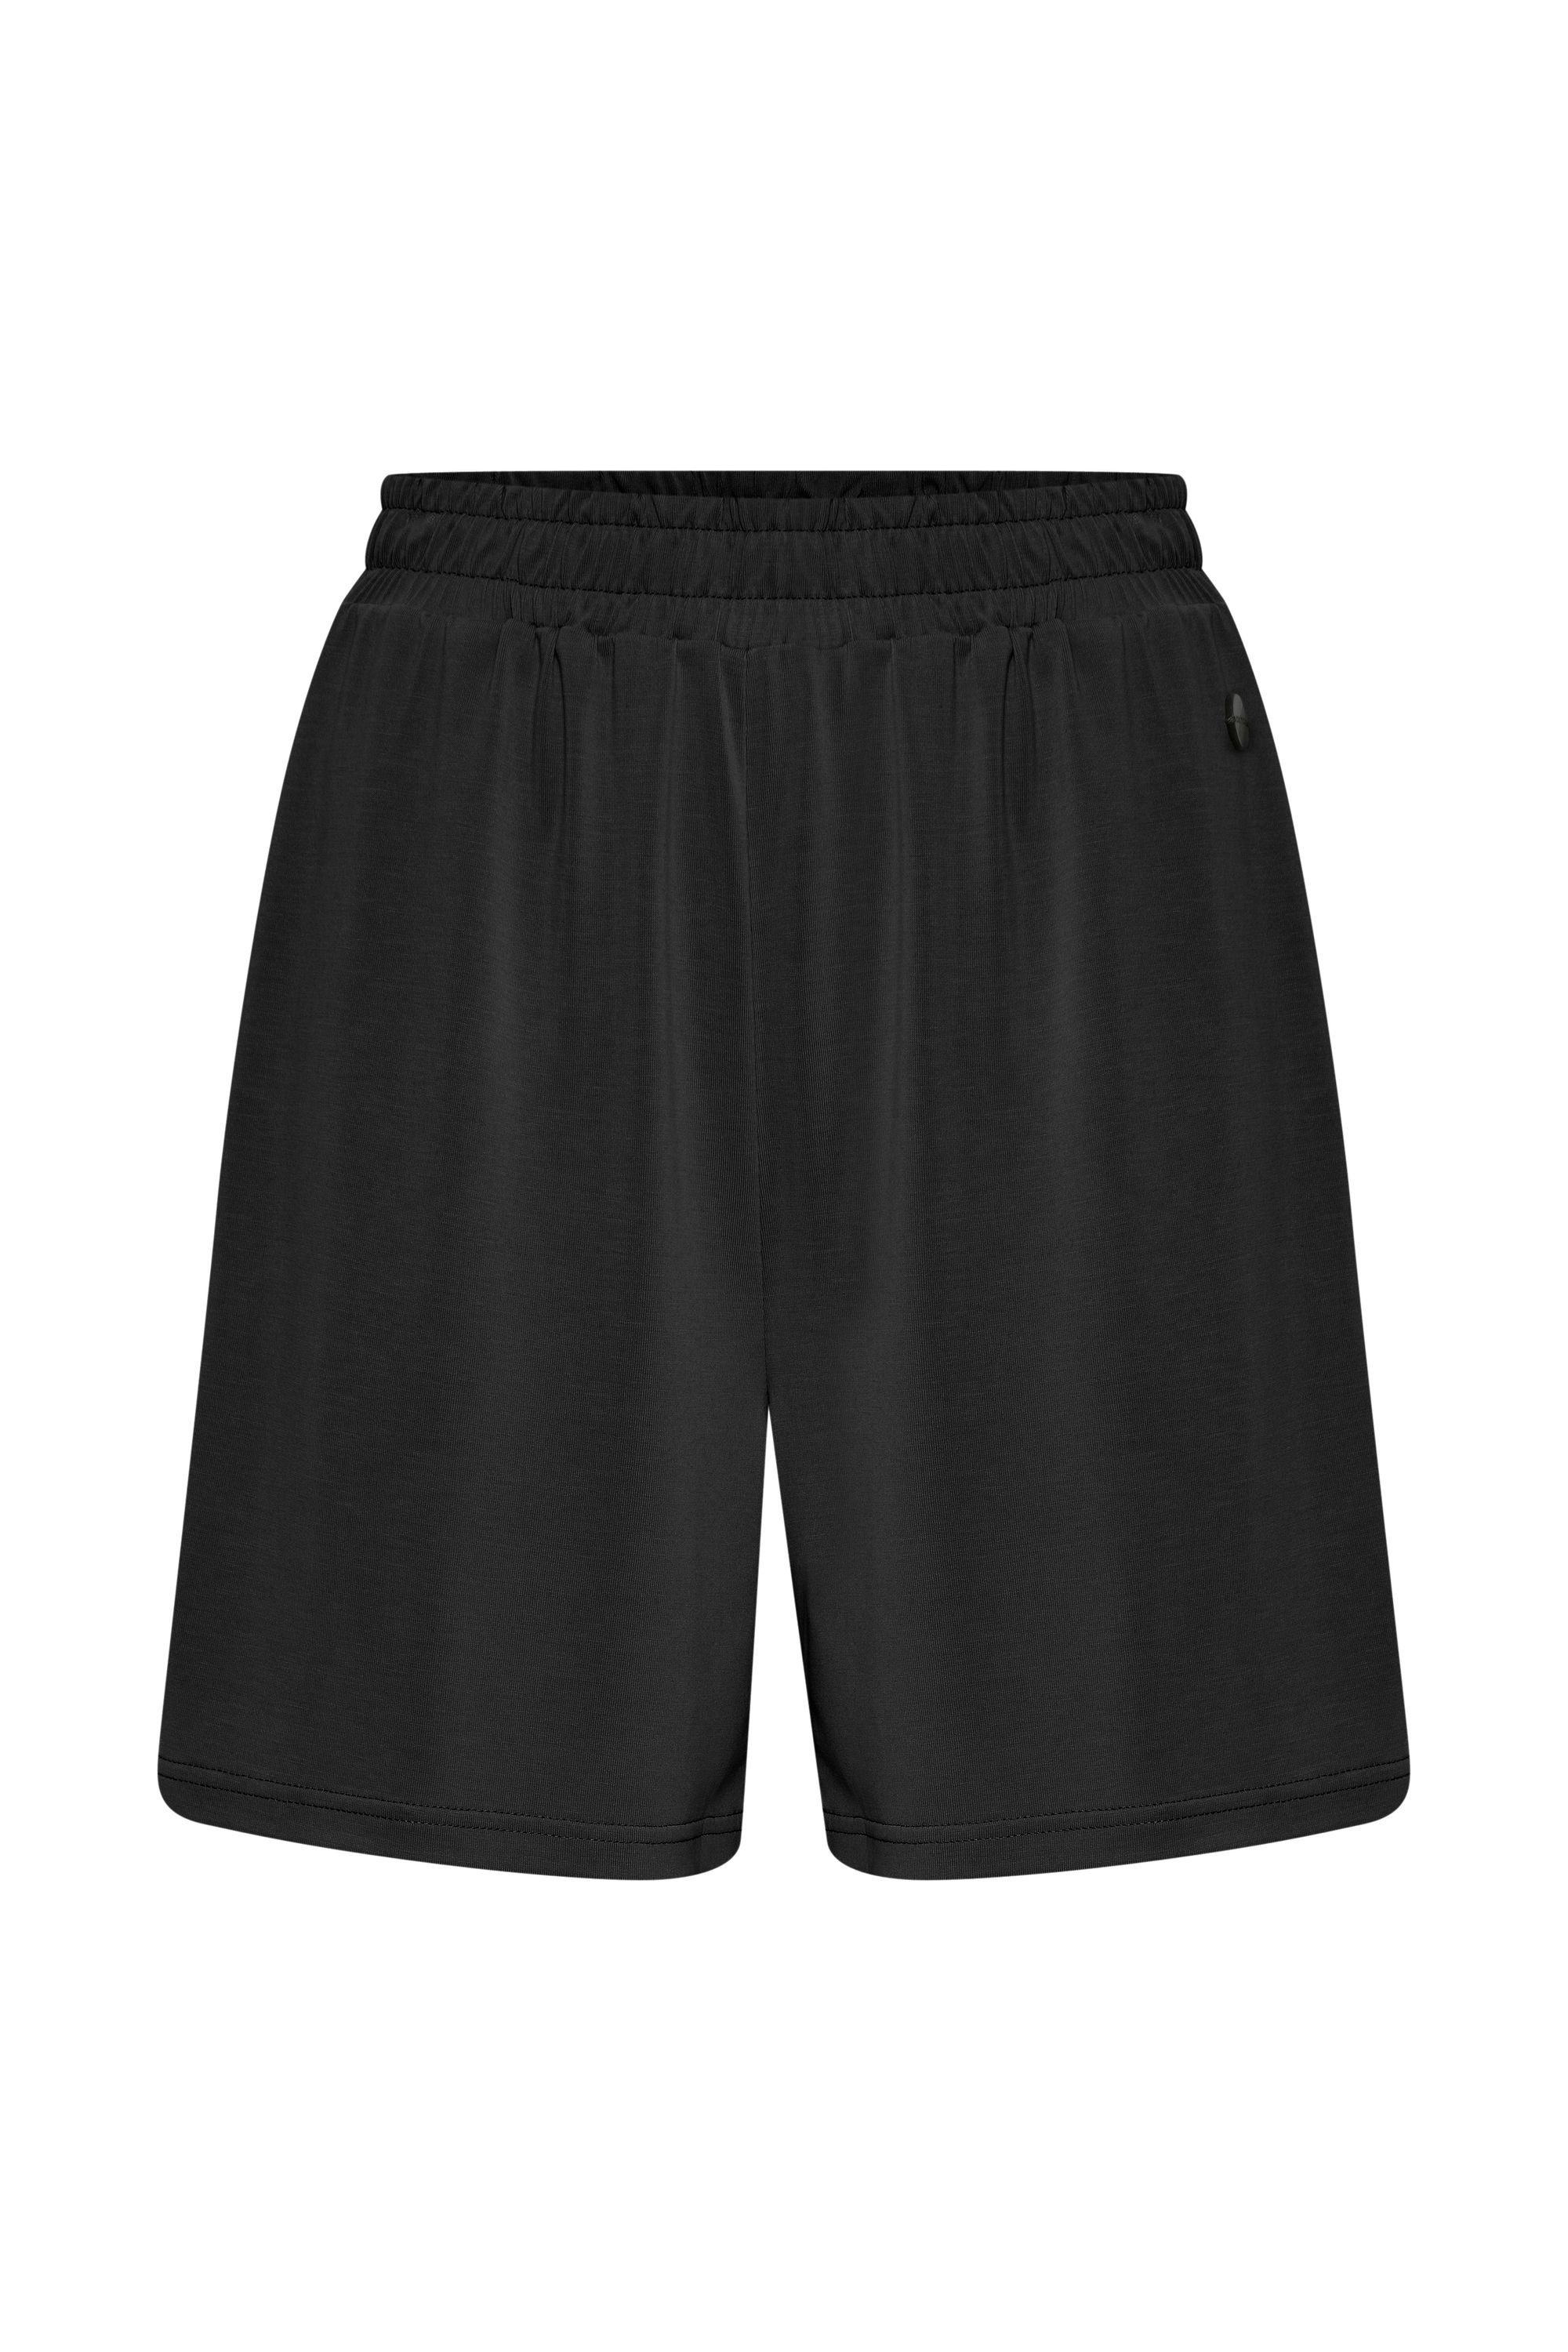 BJÖRK Black Shorts OXMO (194007)